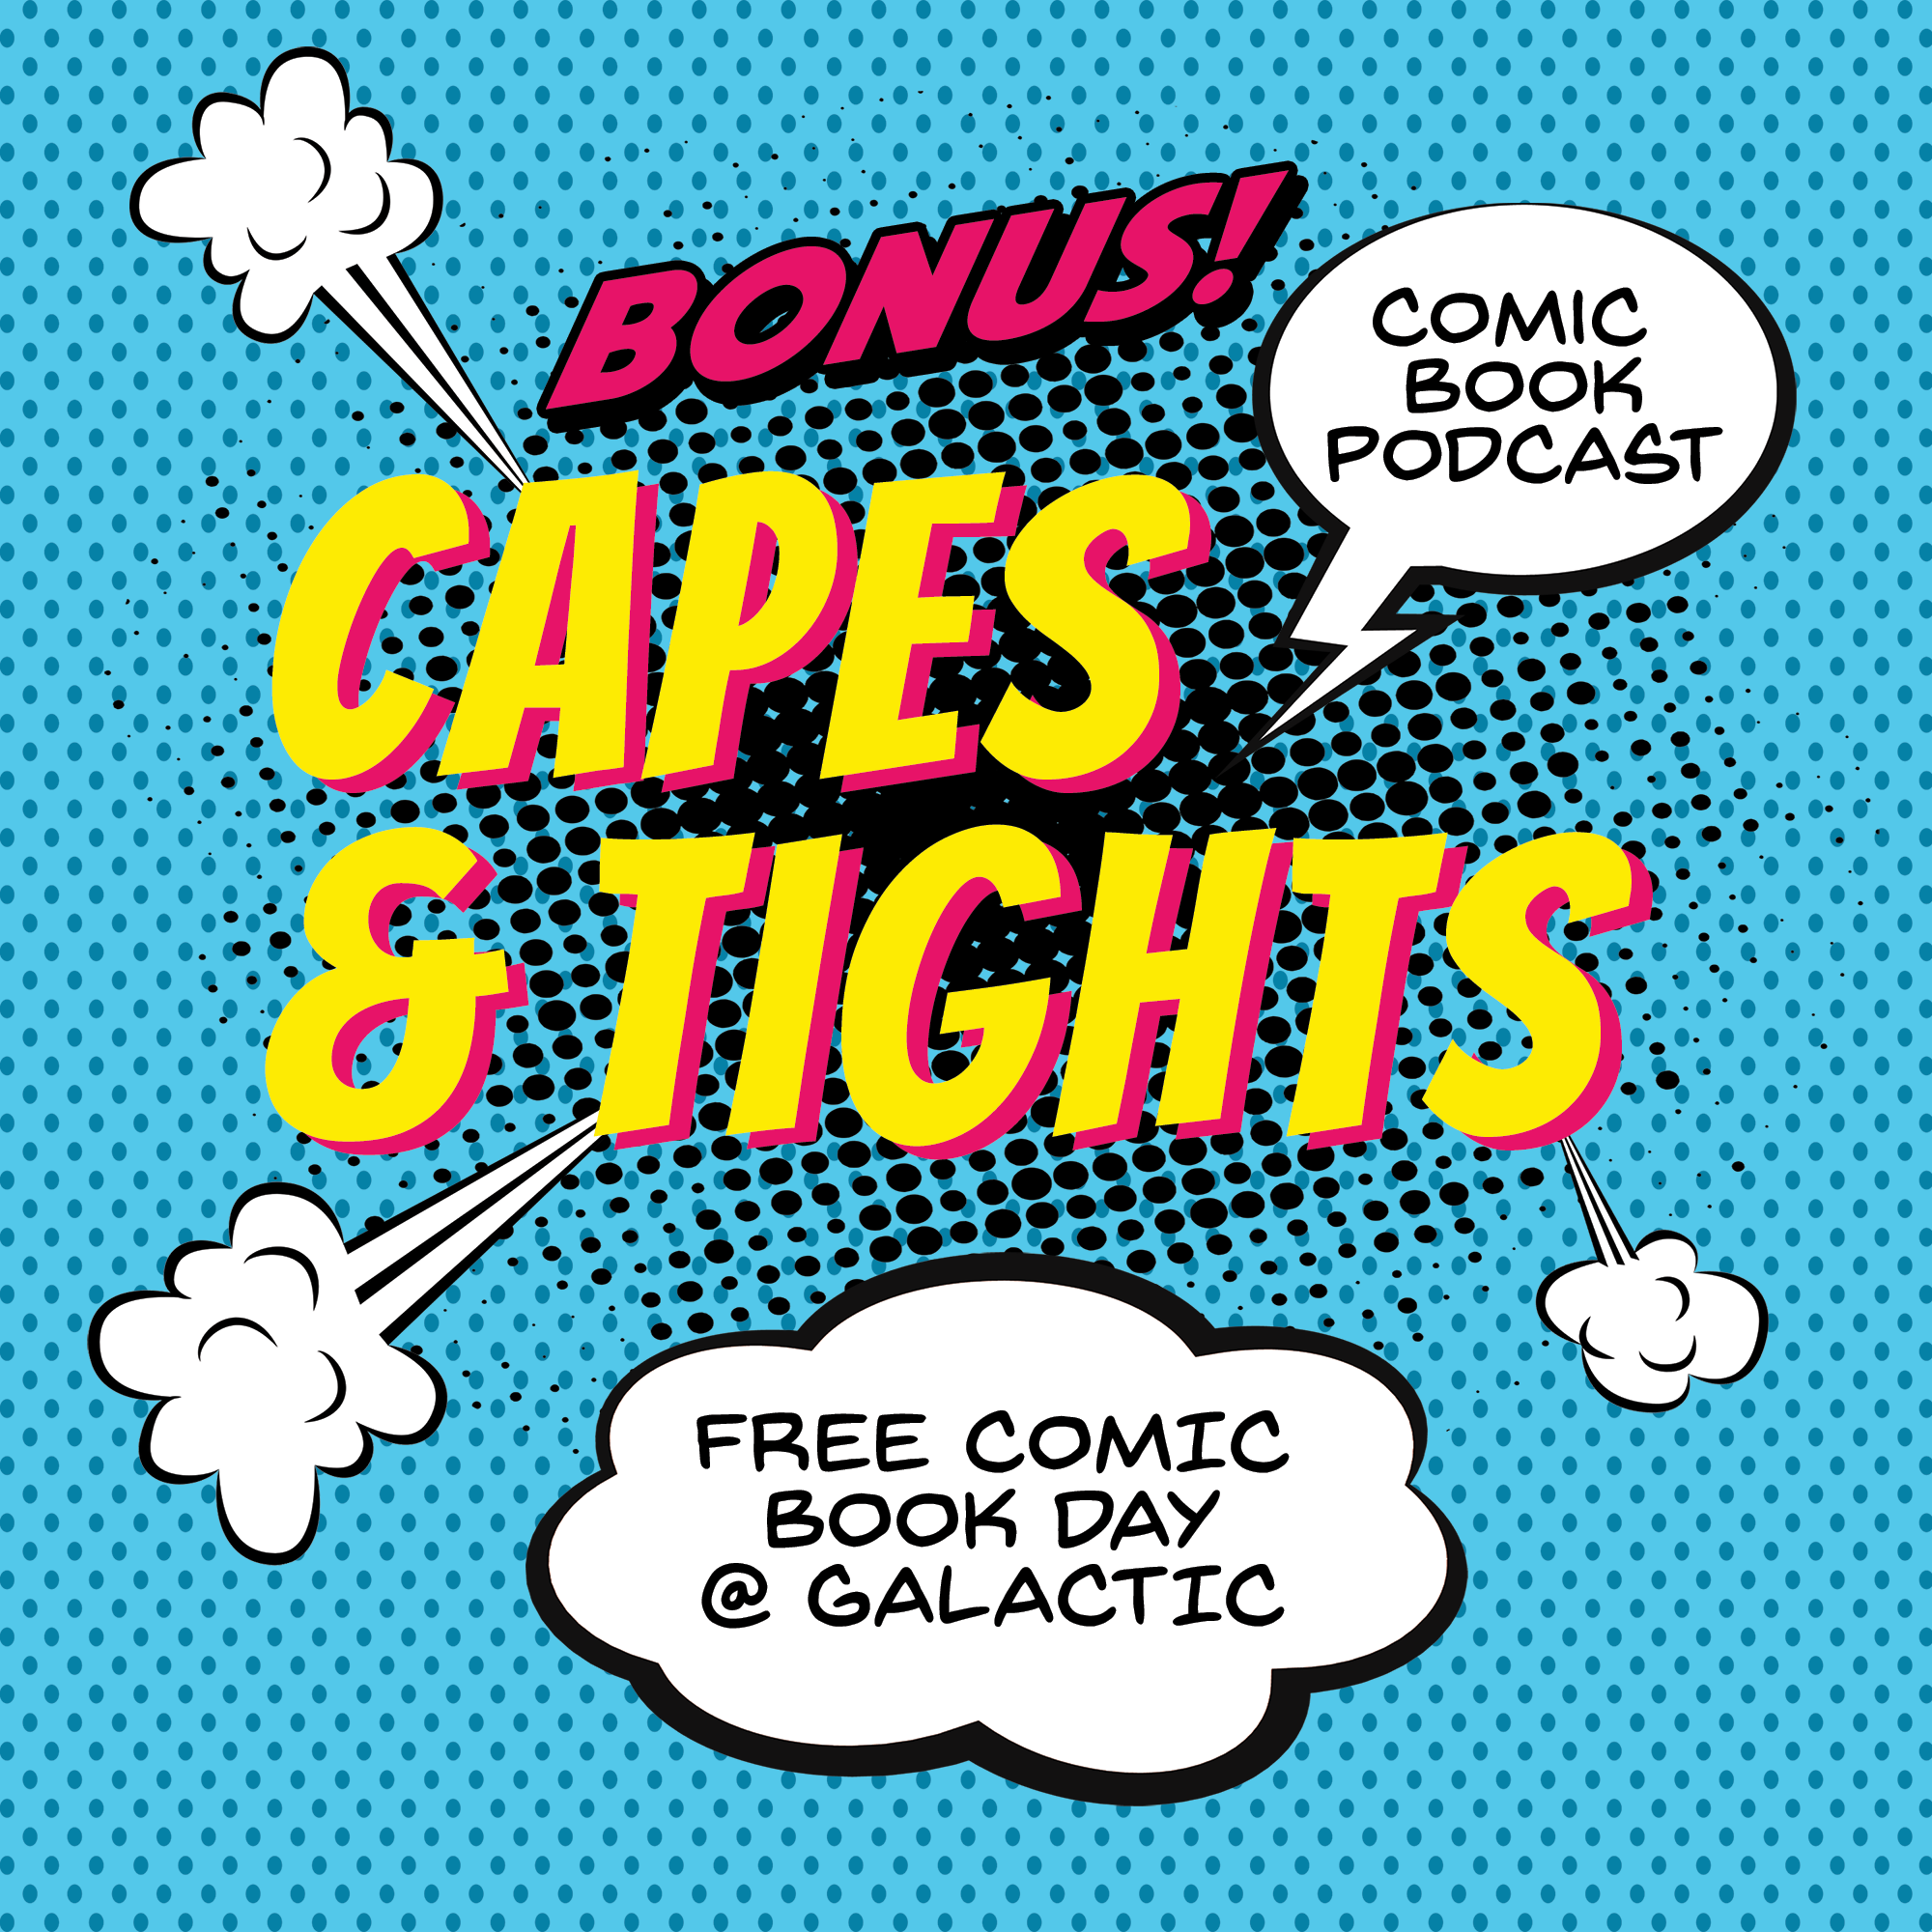 Free Comic Book Day at Galactic Comics